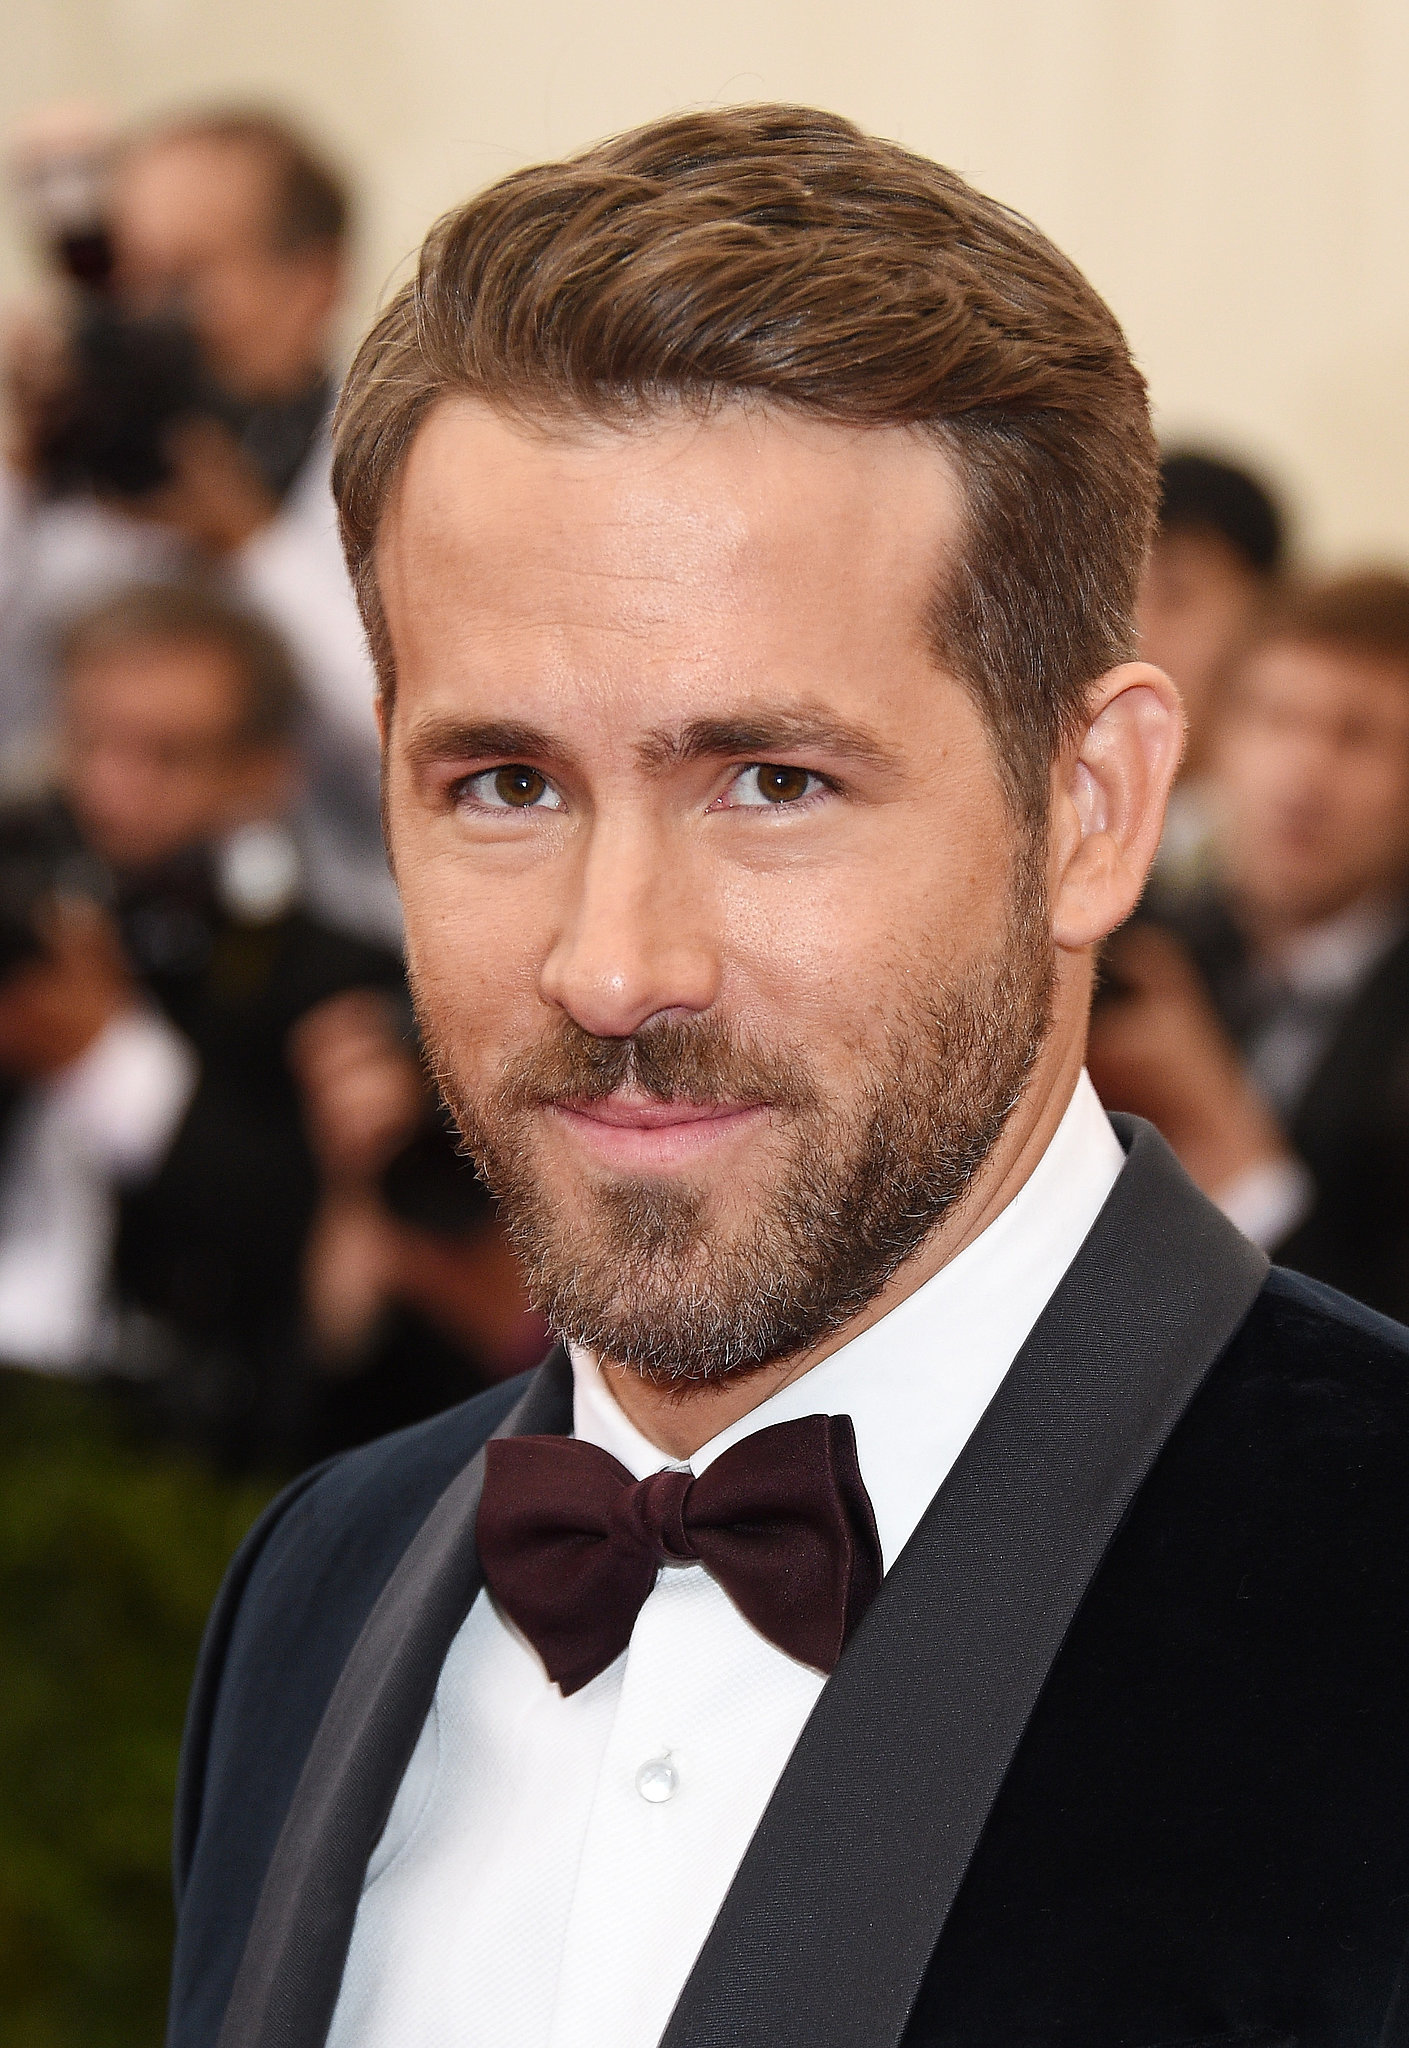 Celebrity Gossip And News The 26 Hottest Pictures Of Hot Dad Ryan Reynolds Popsugar Celebrity 